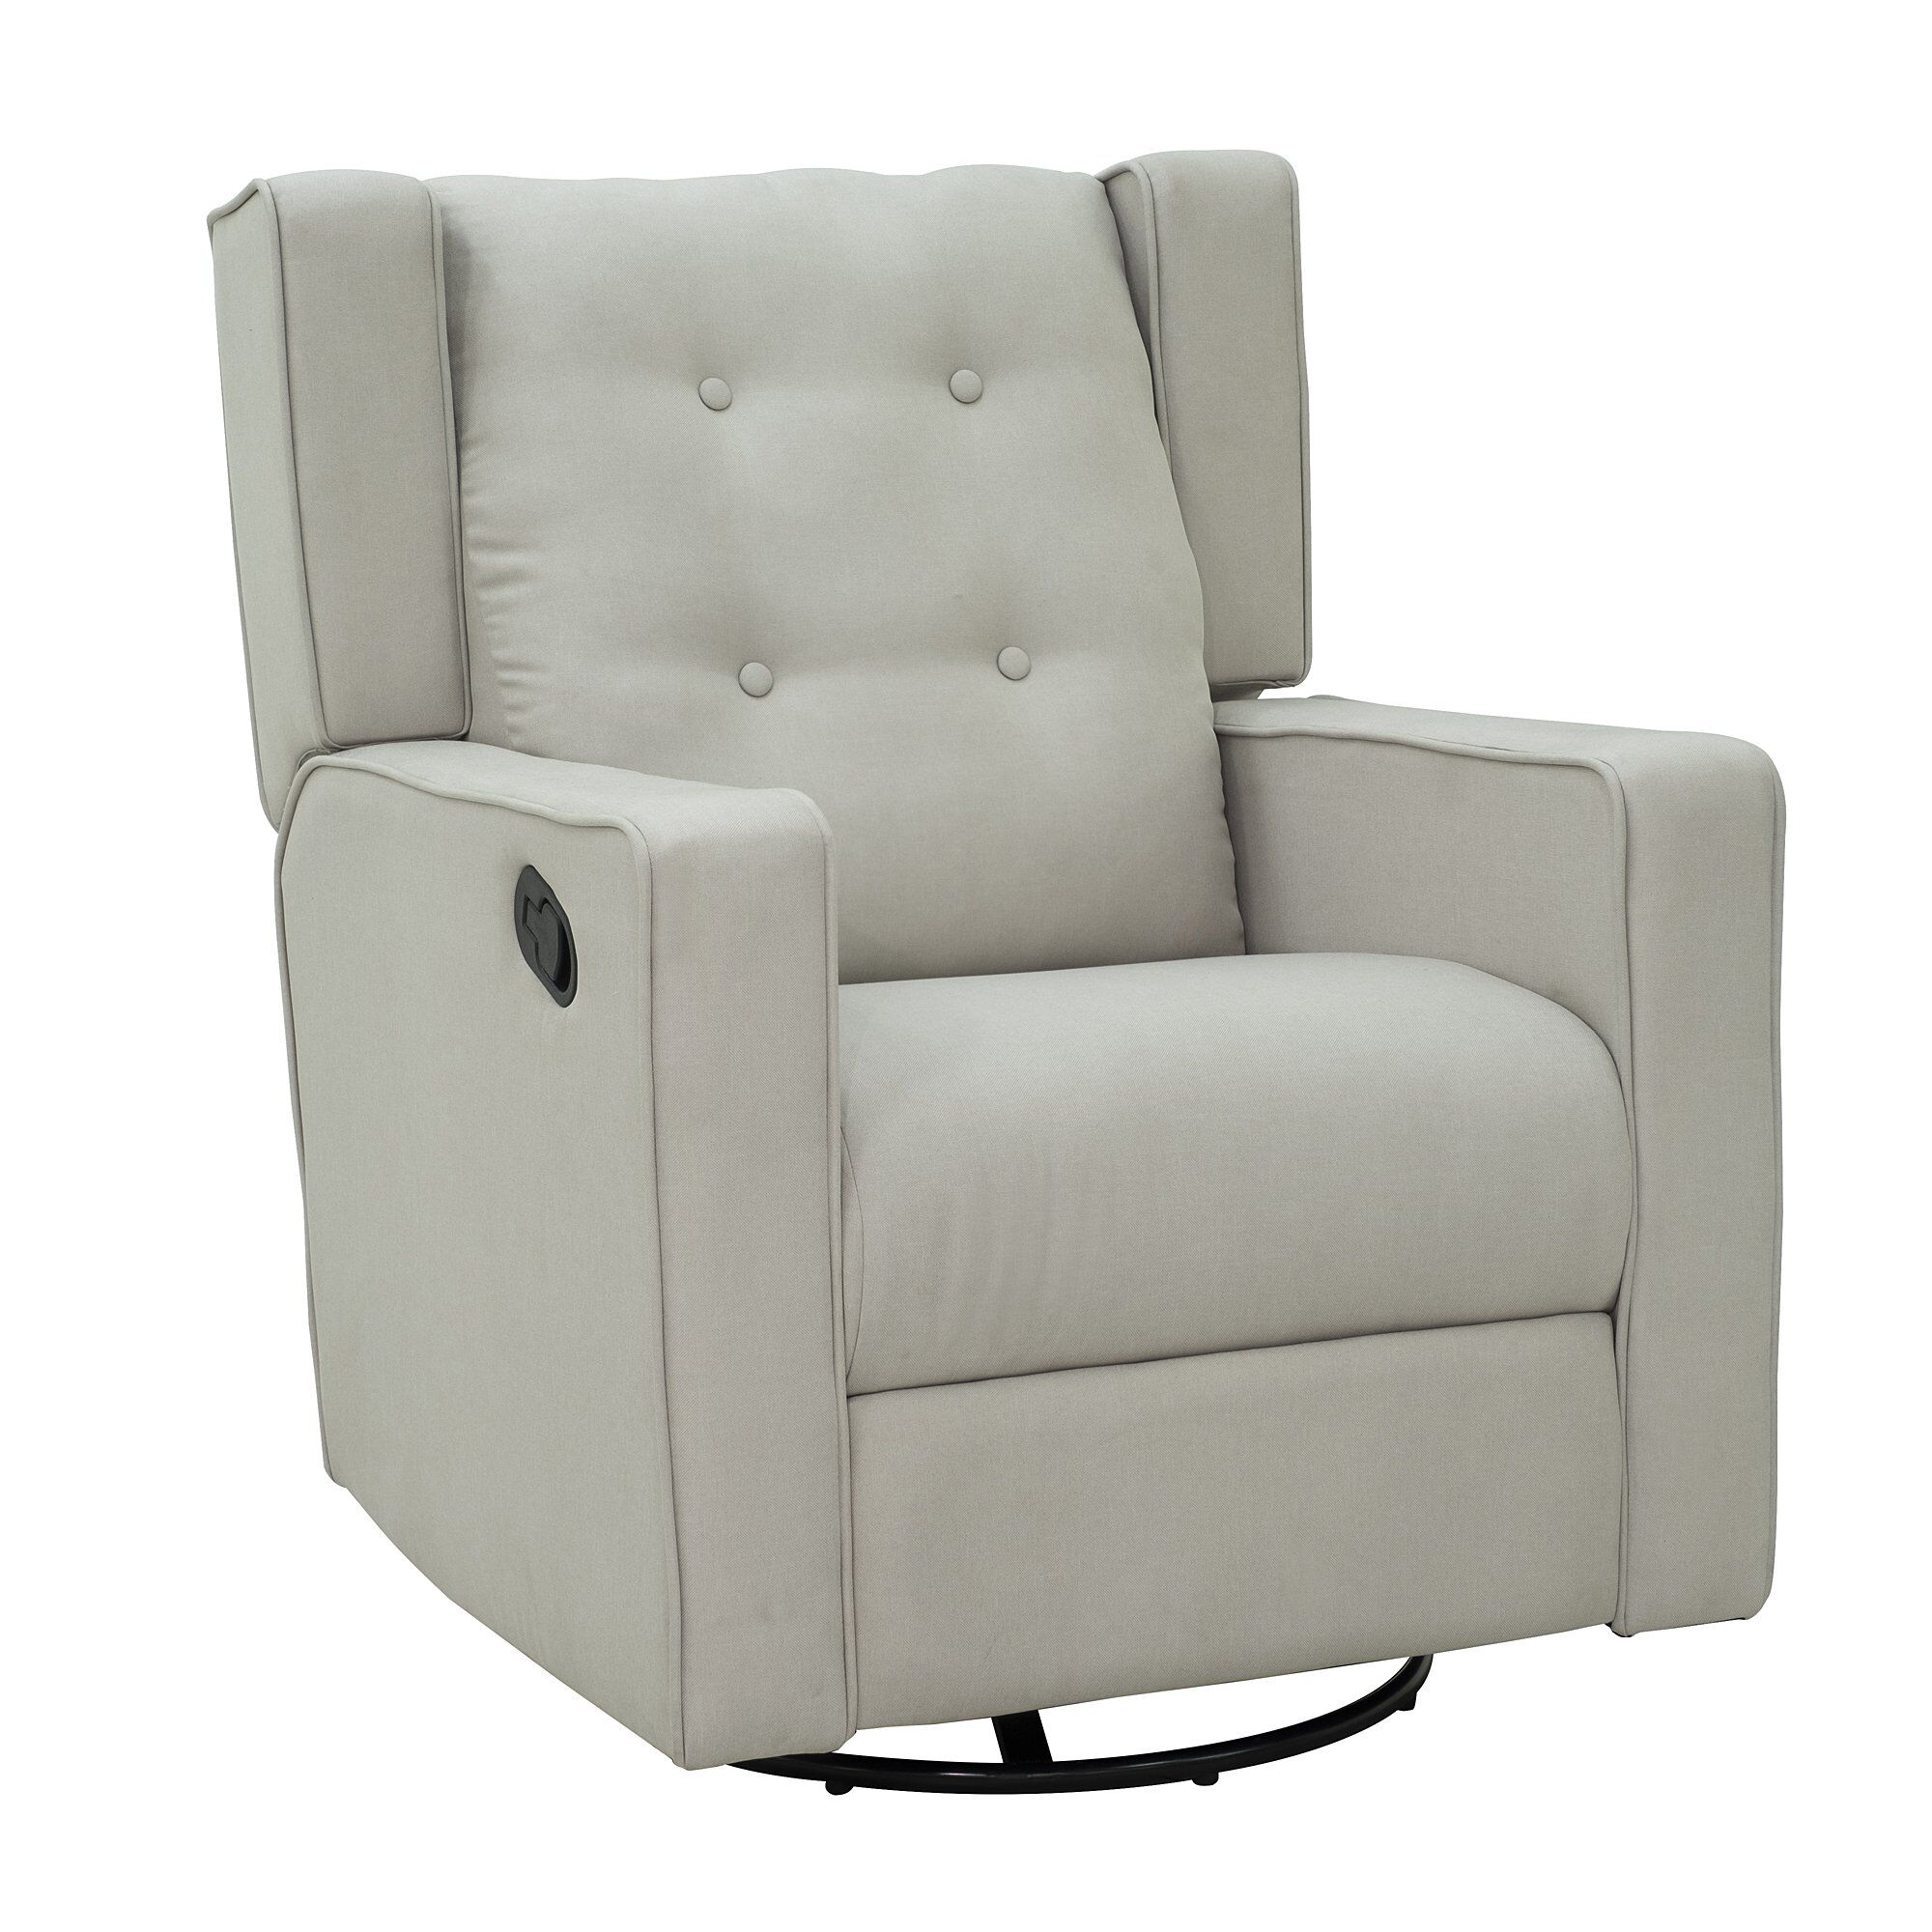 HOMCOM Recliner Chair Linen Fabric Swivel Gliding Beige Comfortable Living Room Sofa Chair   Aosom.com